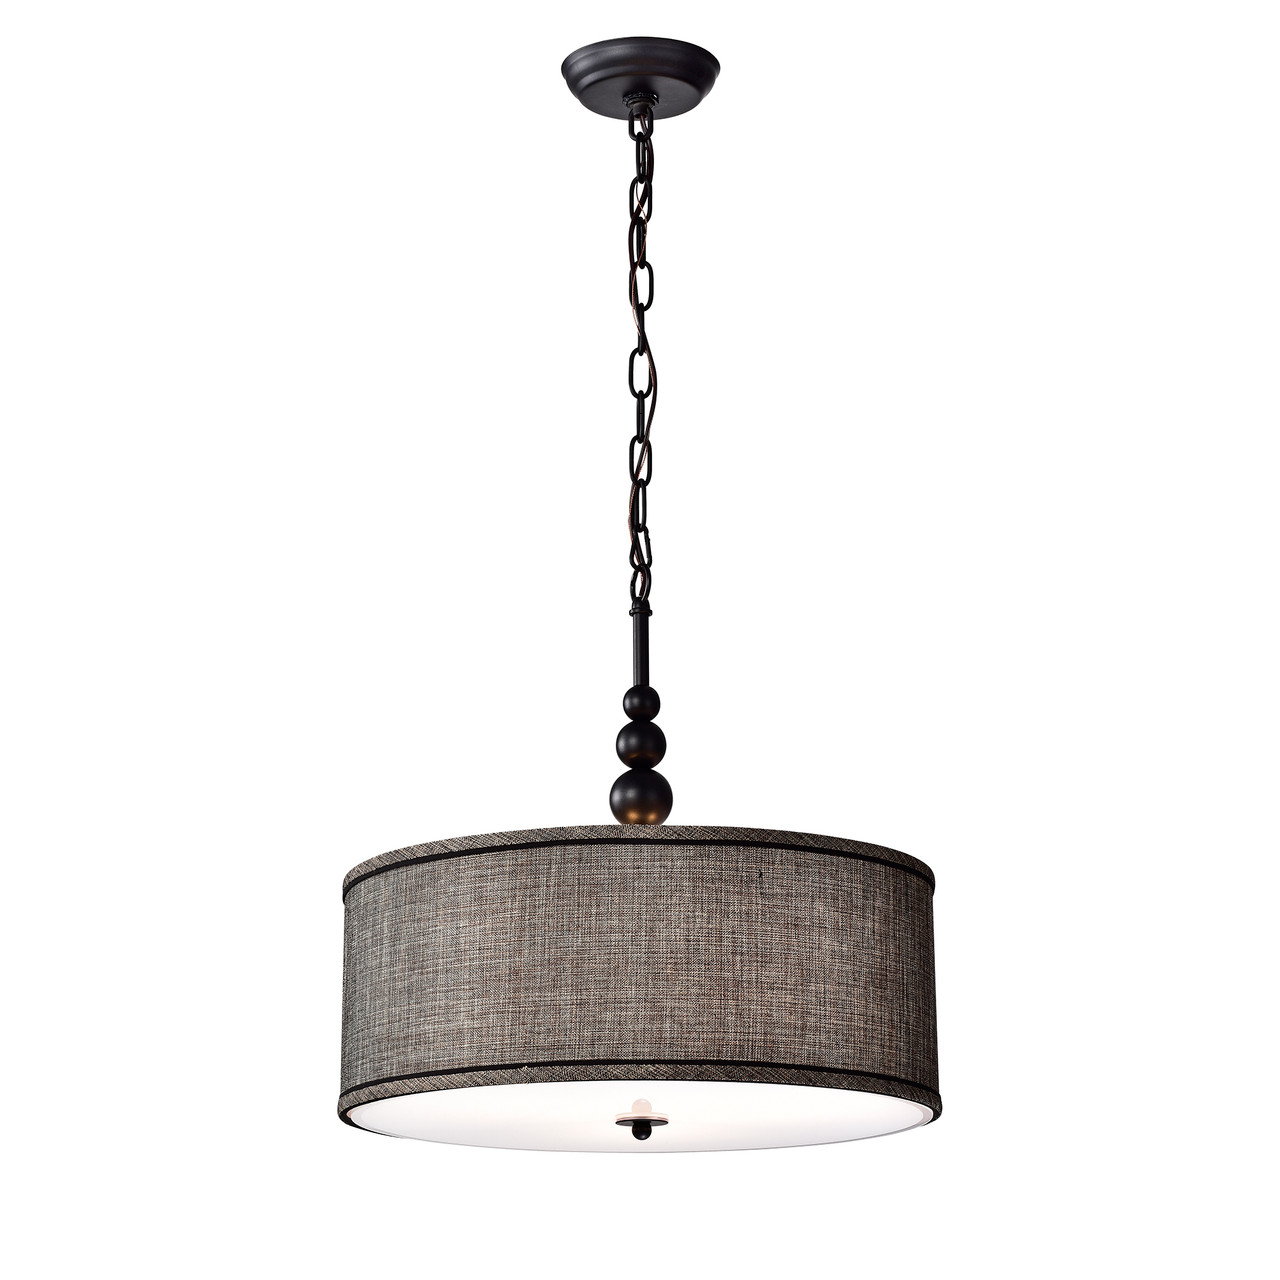 WAREHOUSE OF TIFFANY'S IMP01 Penelope 17.7 in. 3-Light Indoor Black Finish Pendant Lamp with Light Kit